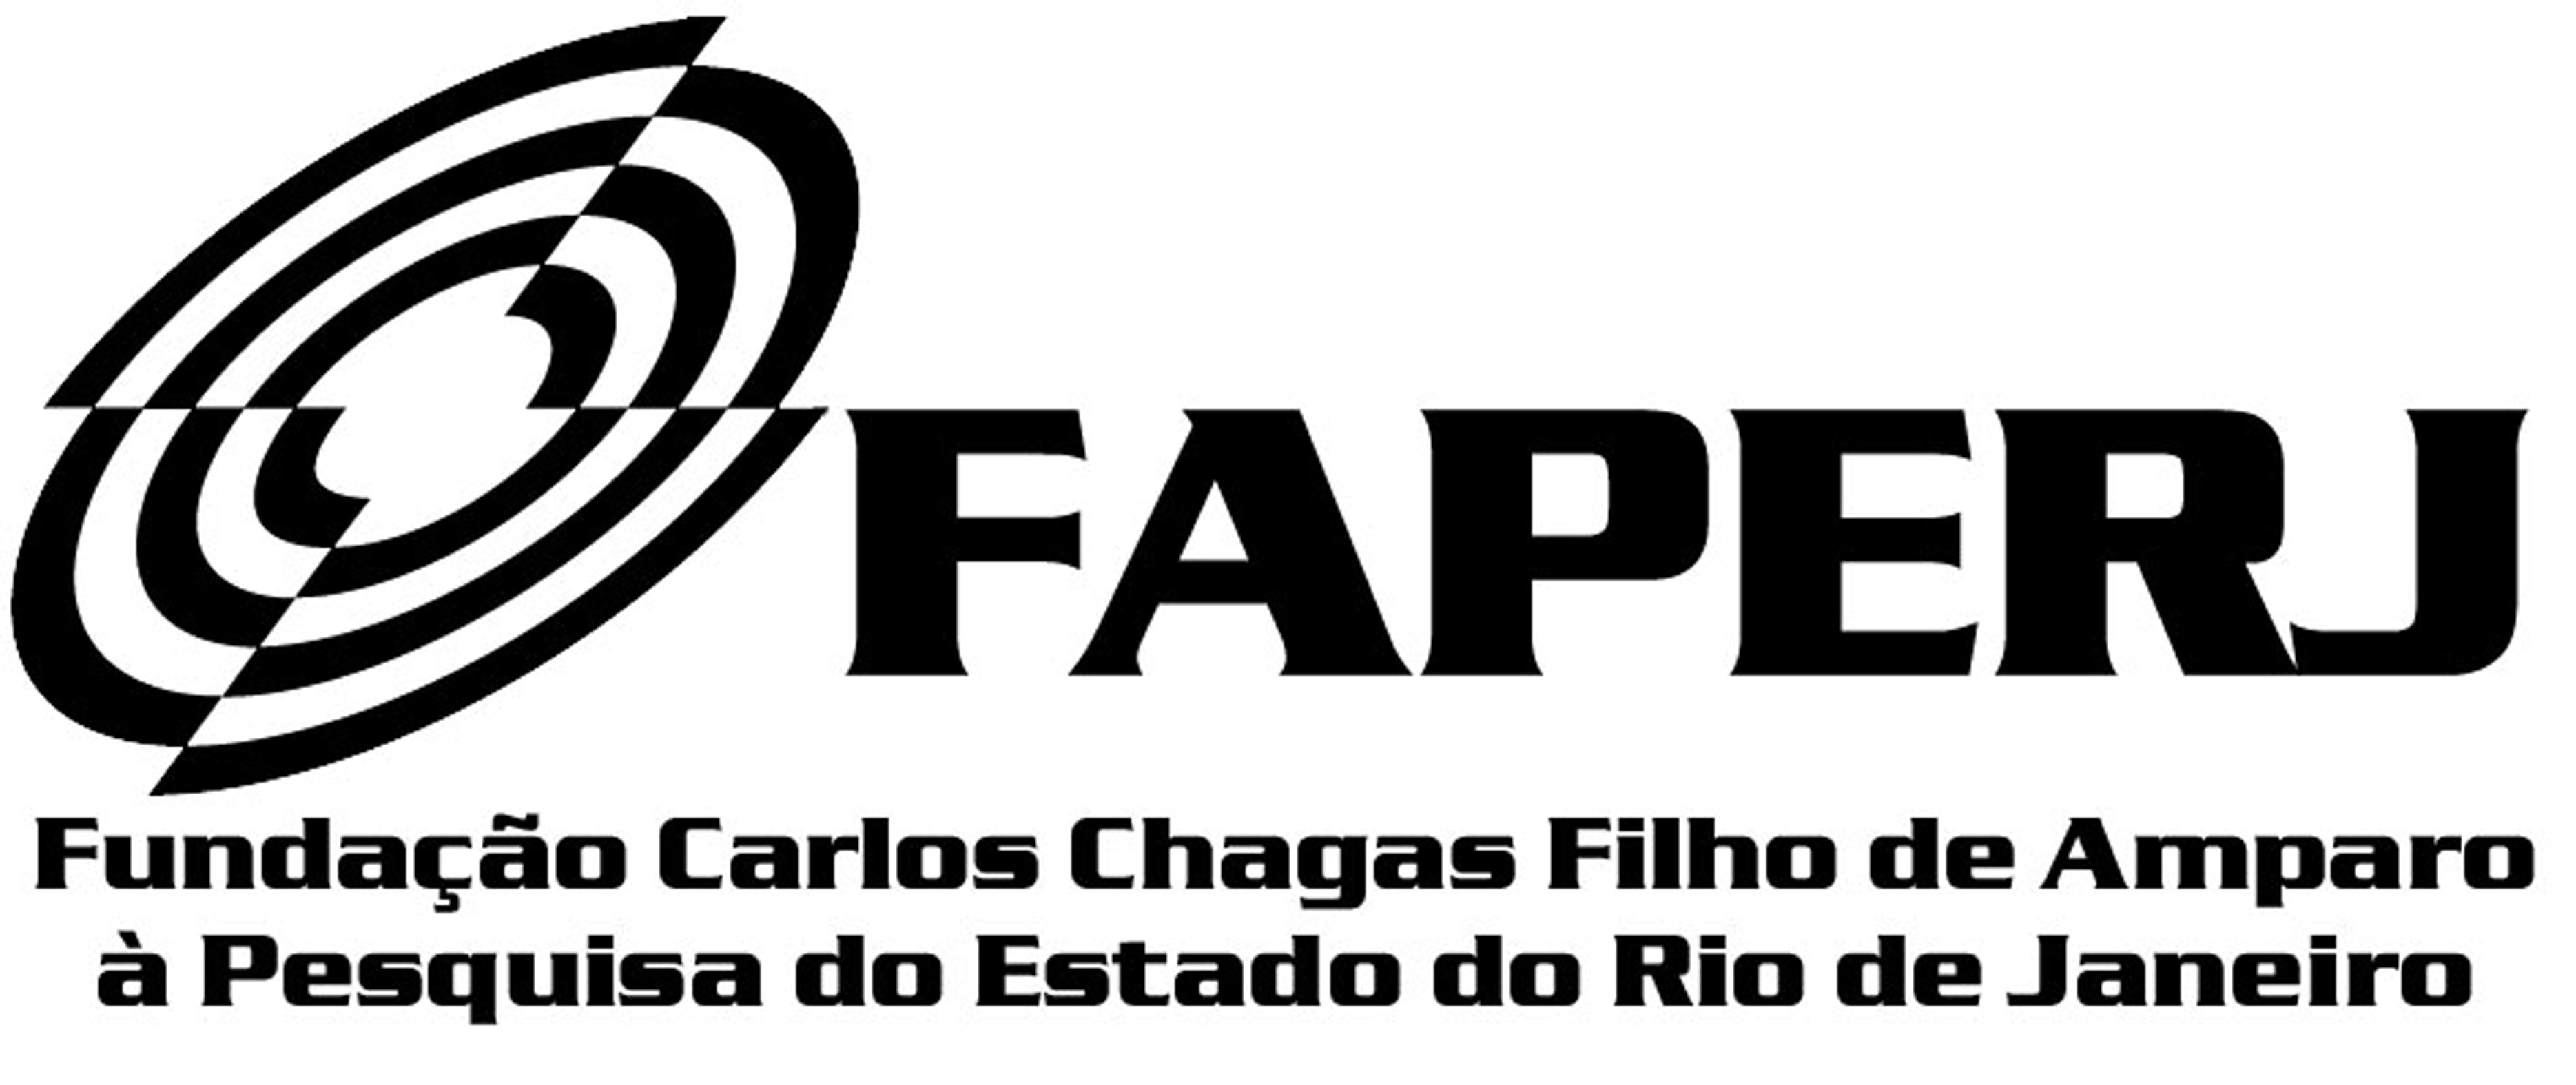 logo_FAPERJ_P&B_jpeg